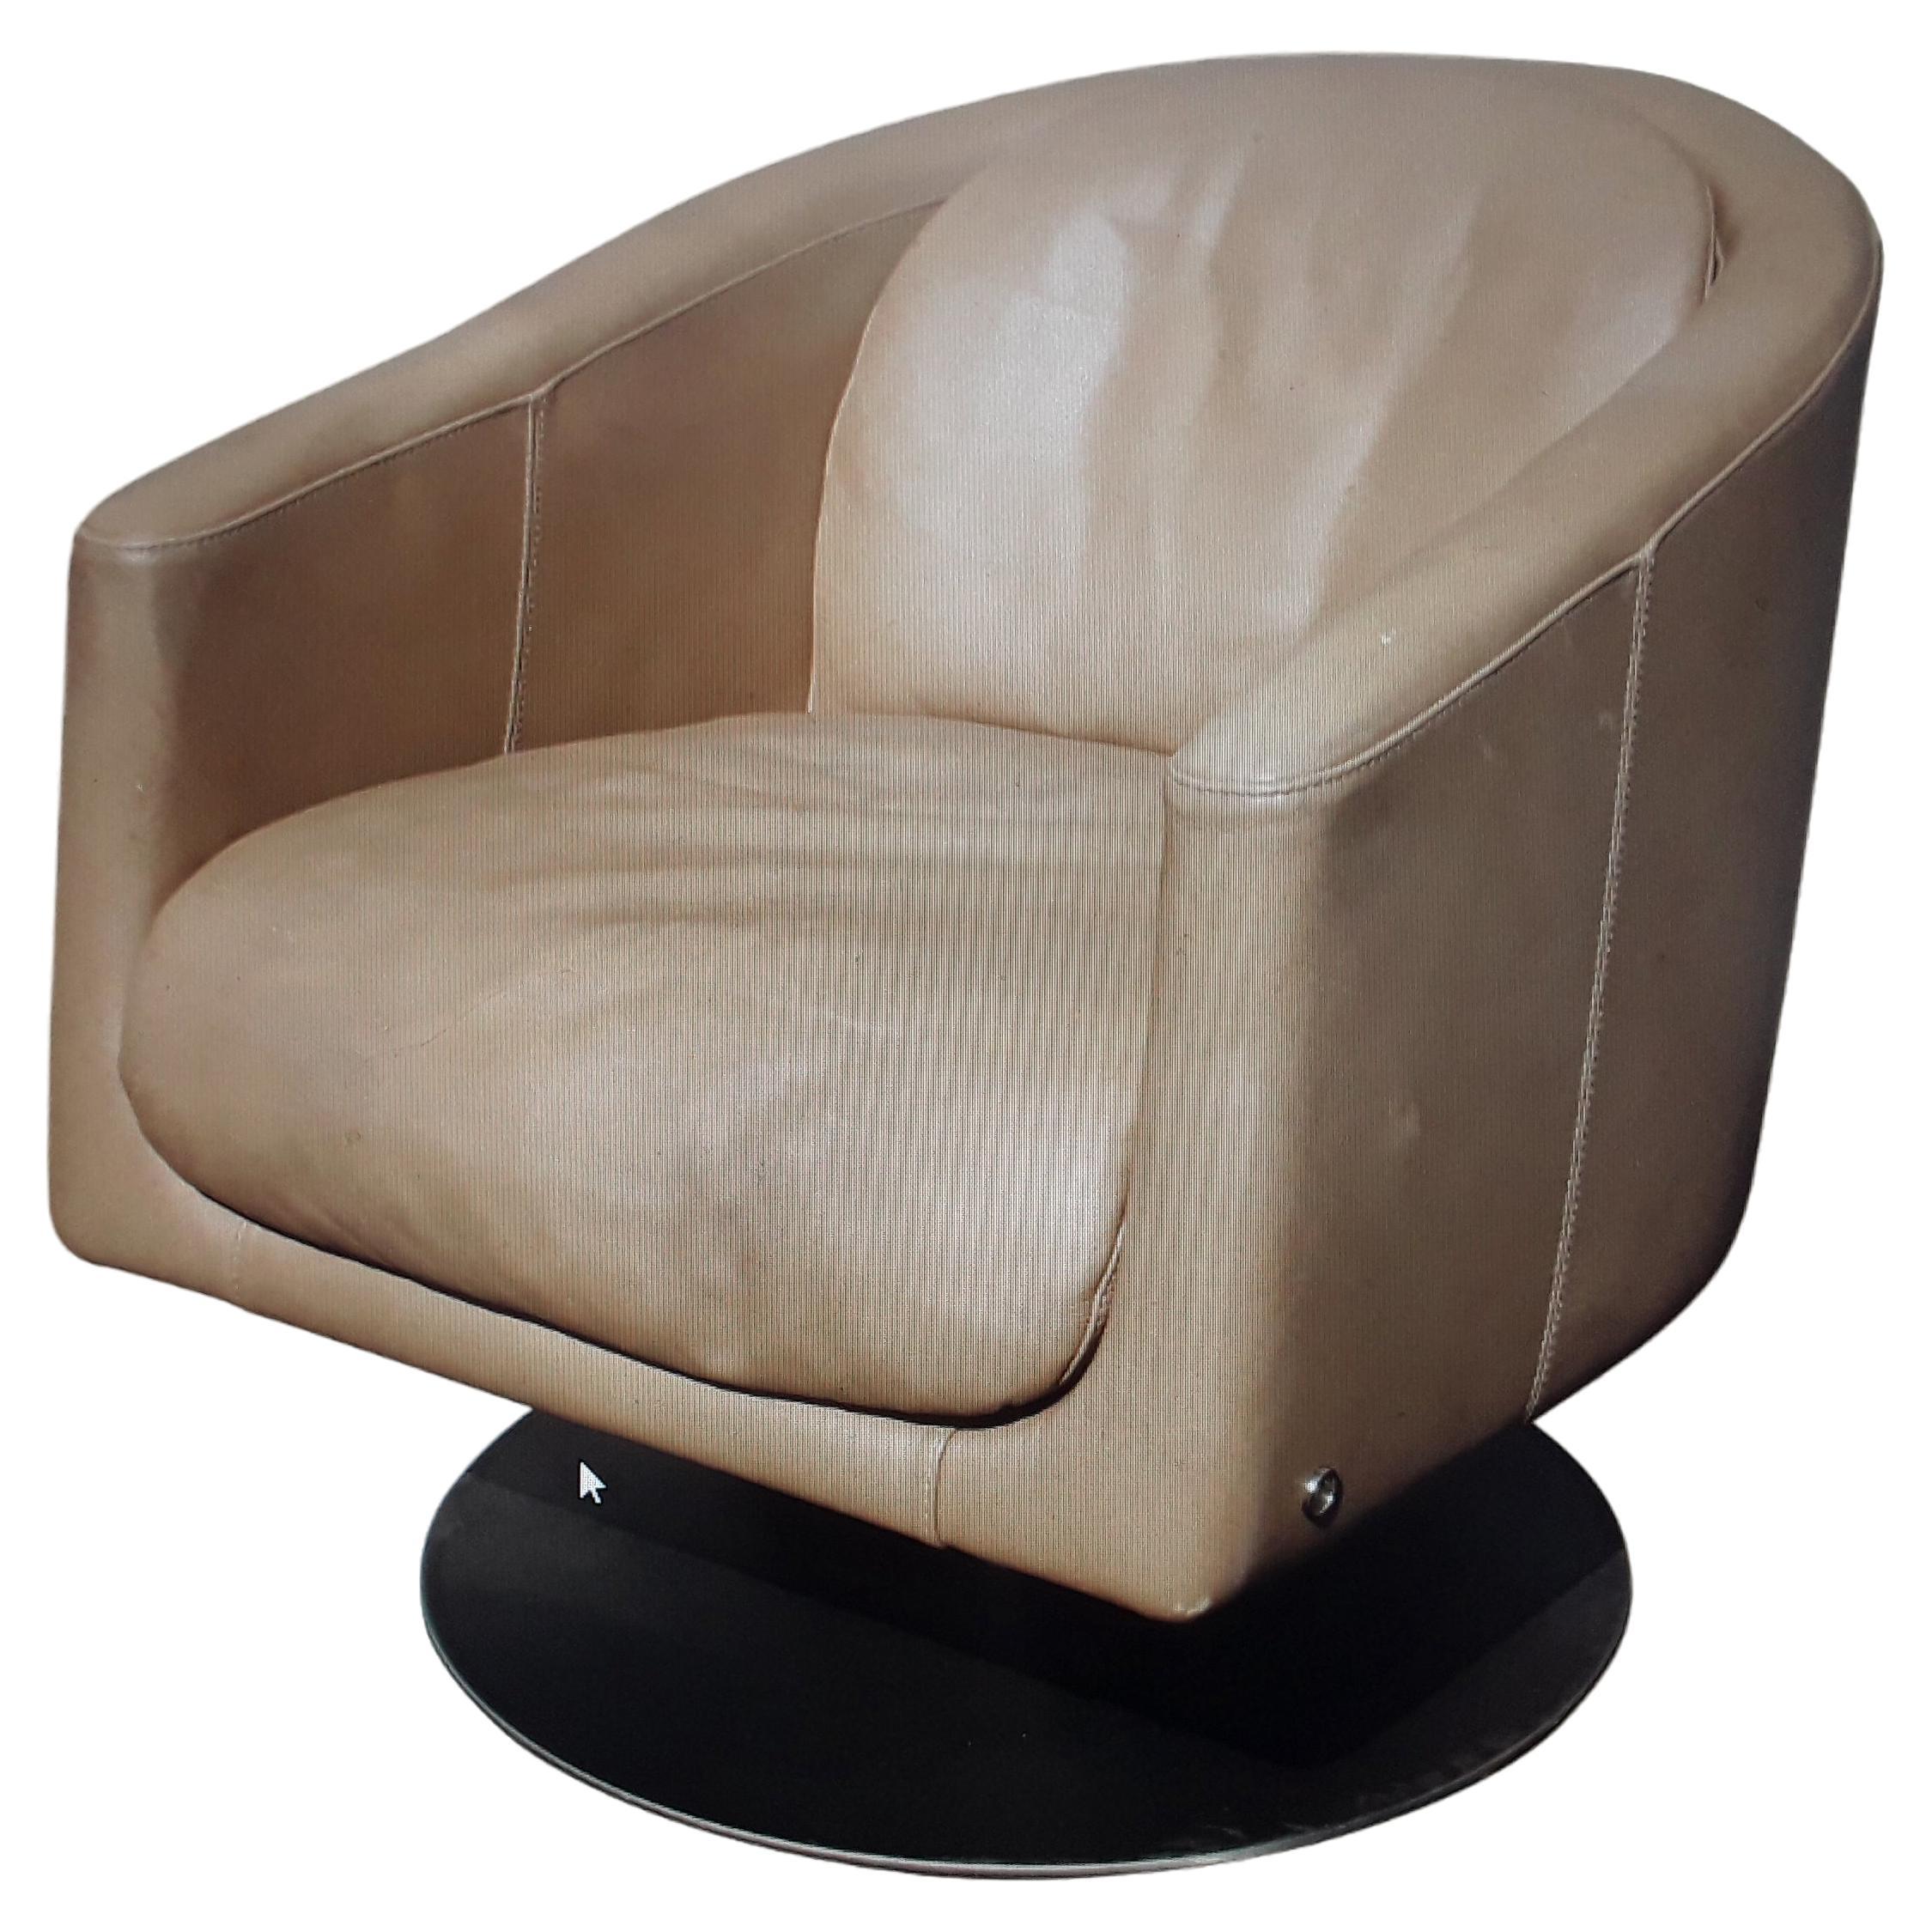 1960's Italian Art Deco style Natuzzi Leather Swivel Club Chair